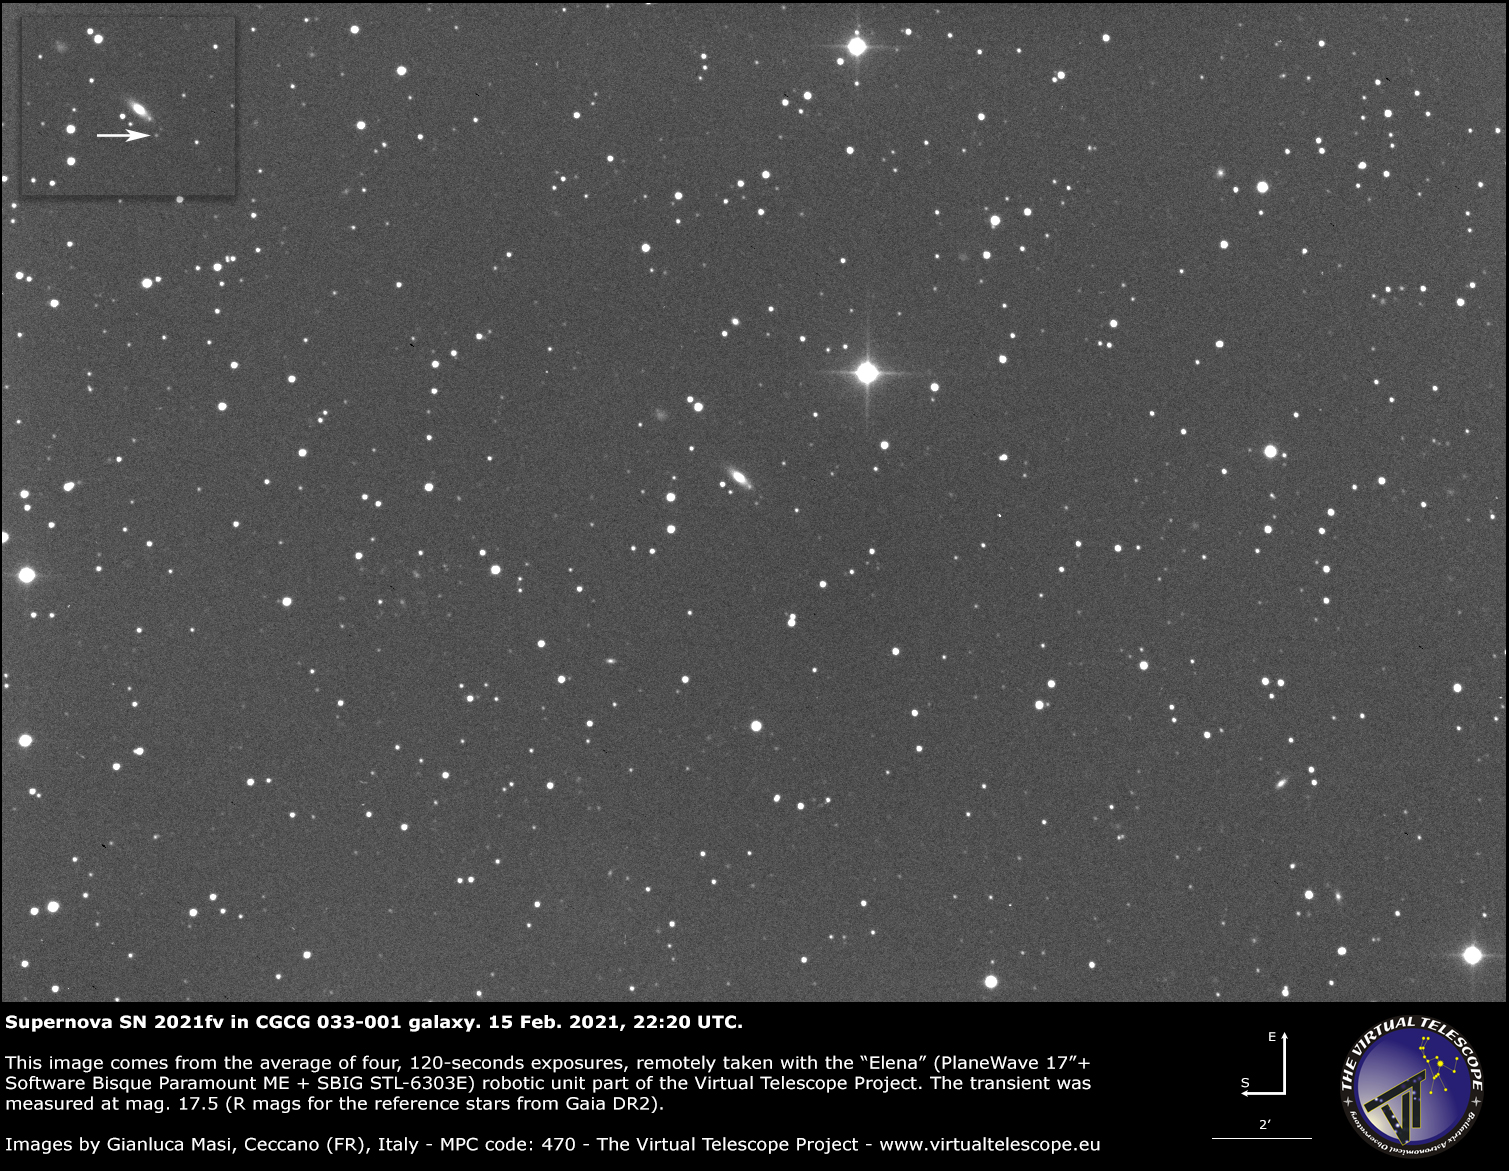 Supernova SN 2021fv in CGCG 033-001 galaxy: 15 Feb. 2021.